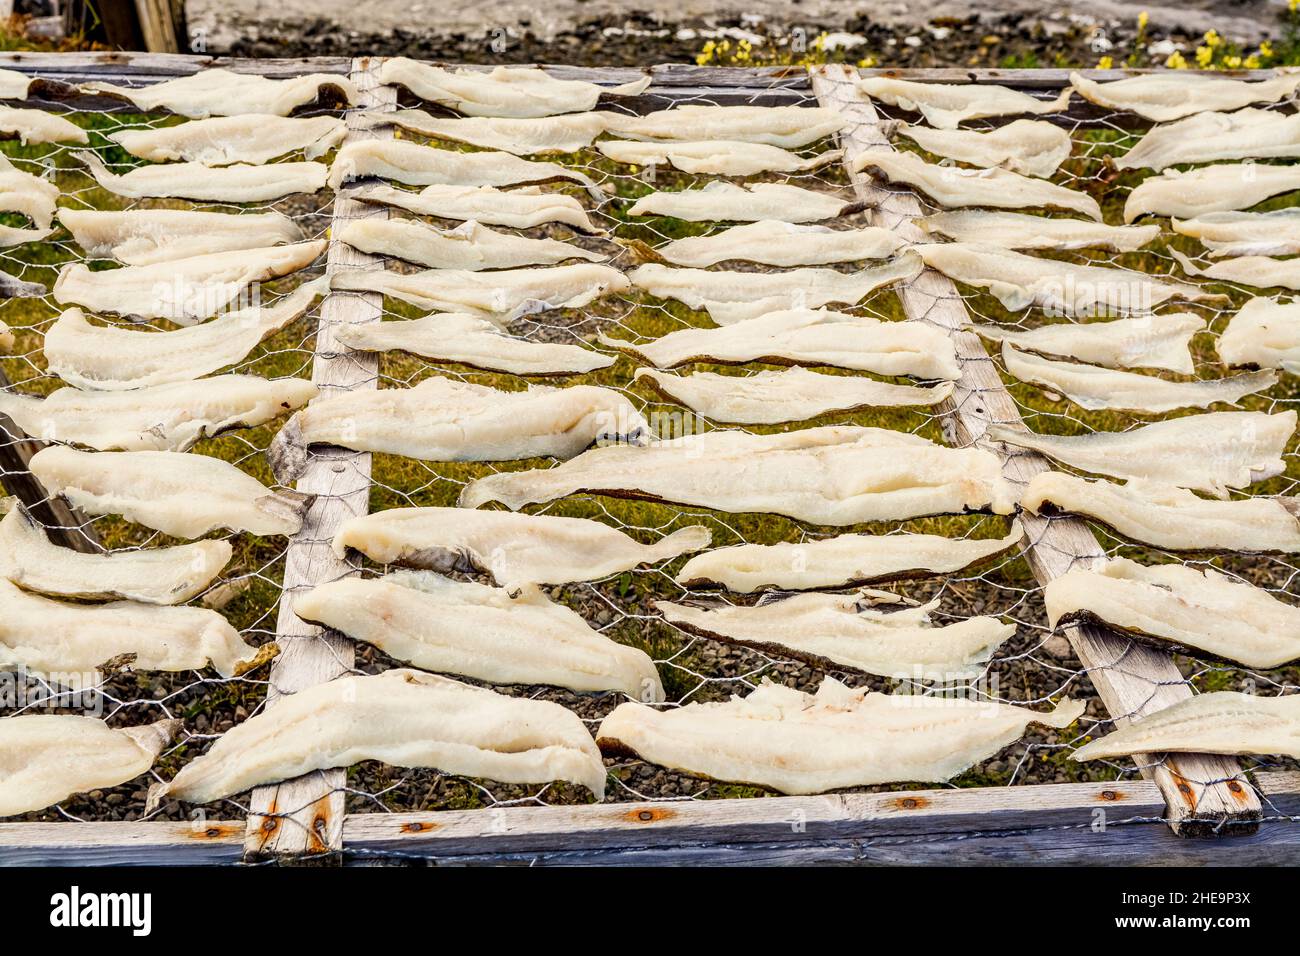 Drying salt cod near Trinity, Bonavista Peninsula, Newfoundland, Canada. Stock Photo